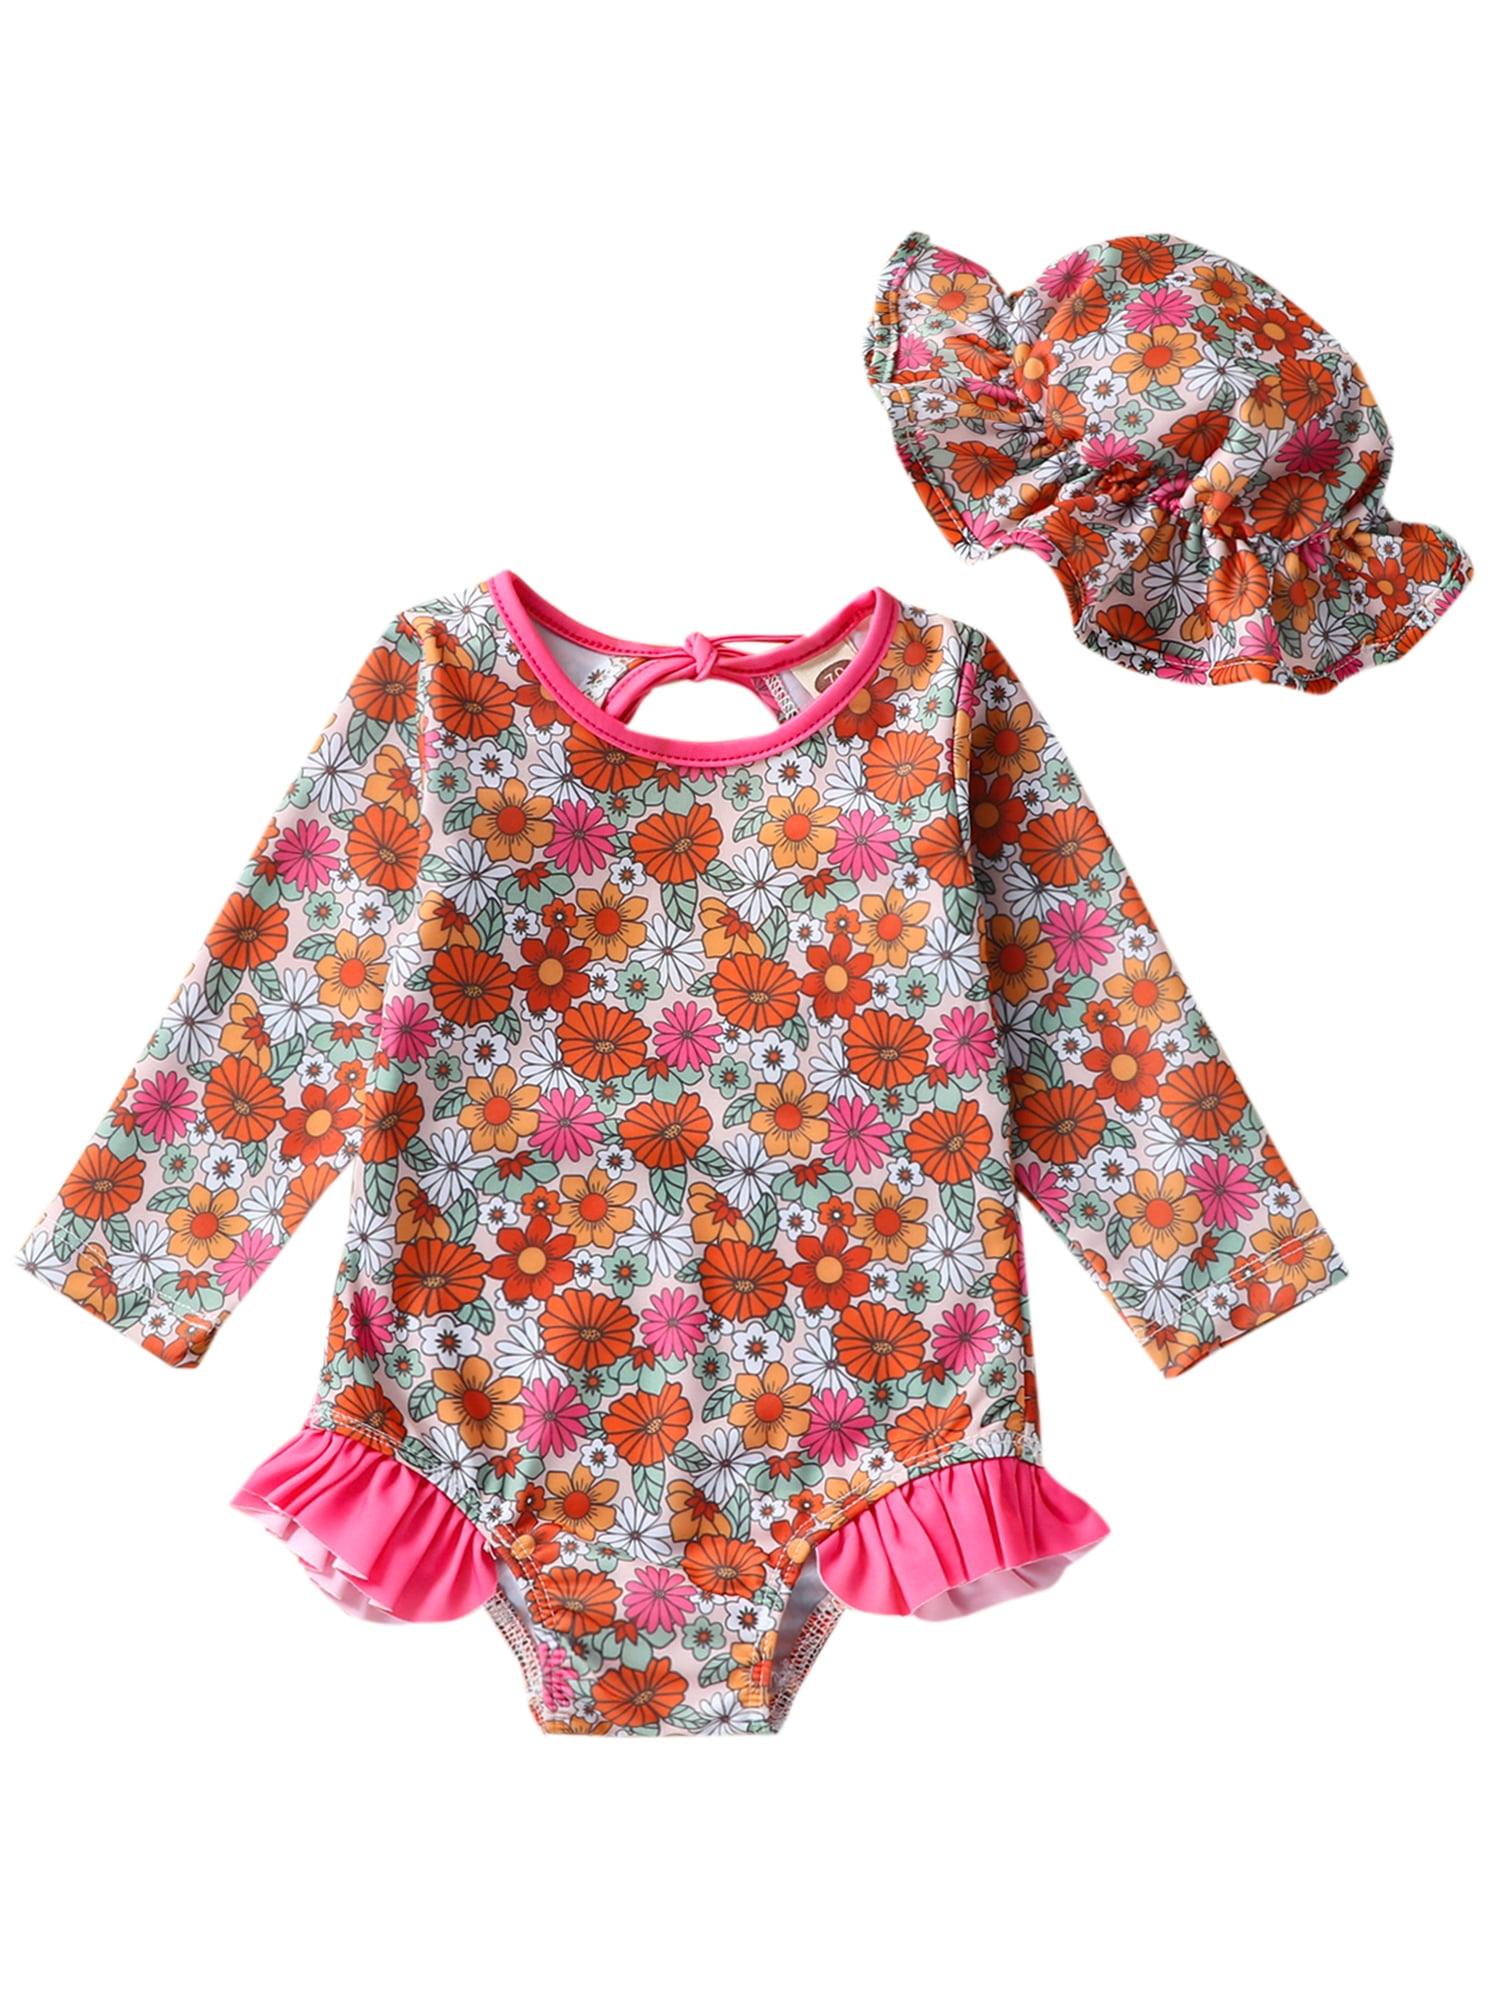 Wassery Infant Baby Girls Summer Romper Swimsuit 3M 6M 12M 24M Flower ...